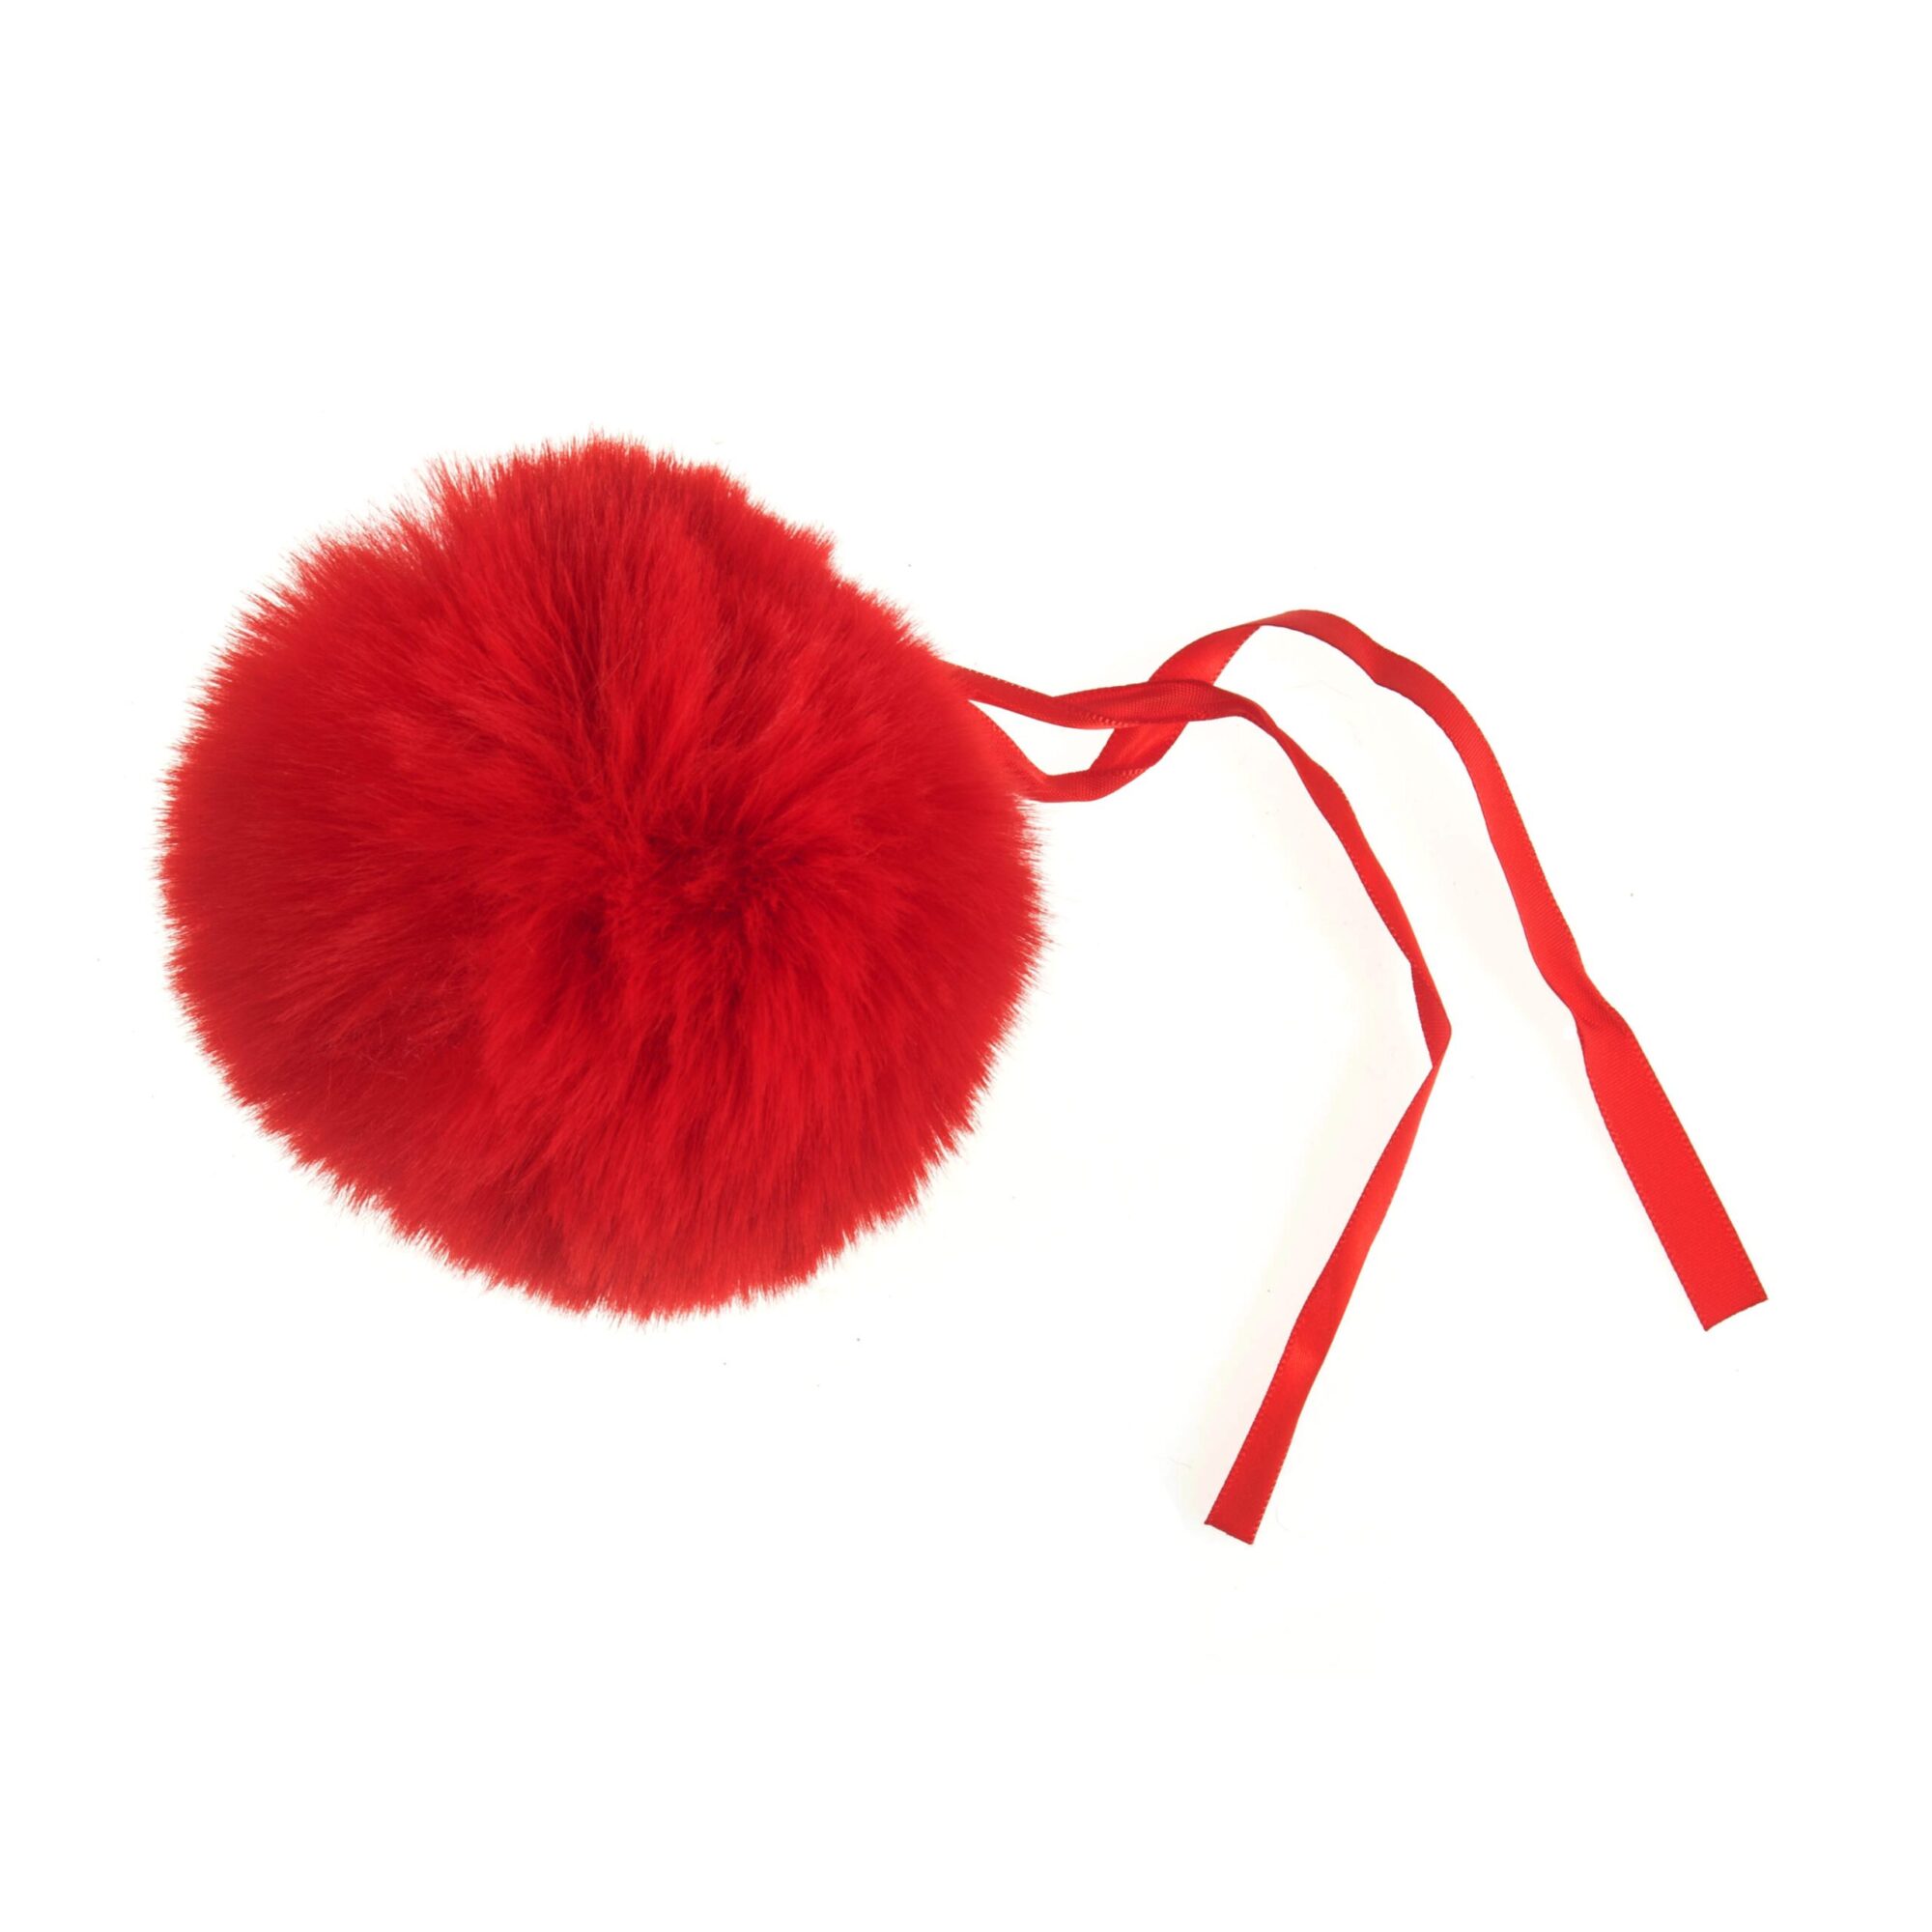 Large Faux Fur Pom Pom 11cm - Red product image